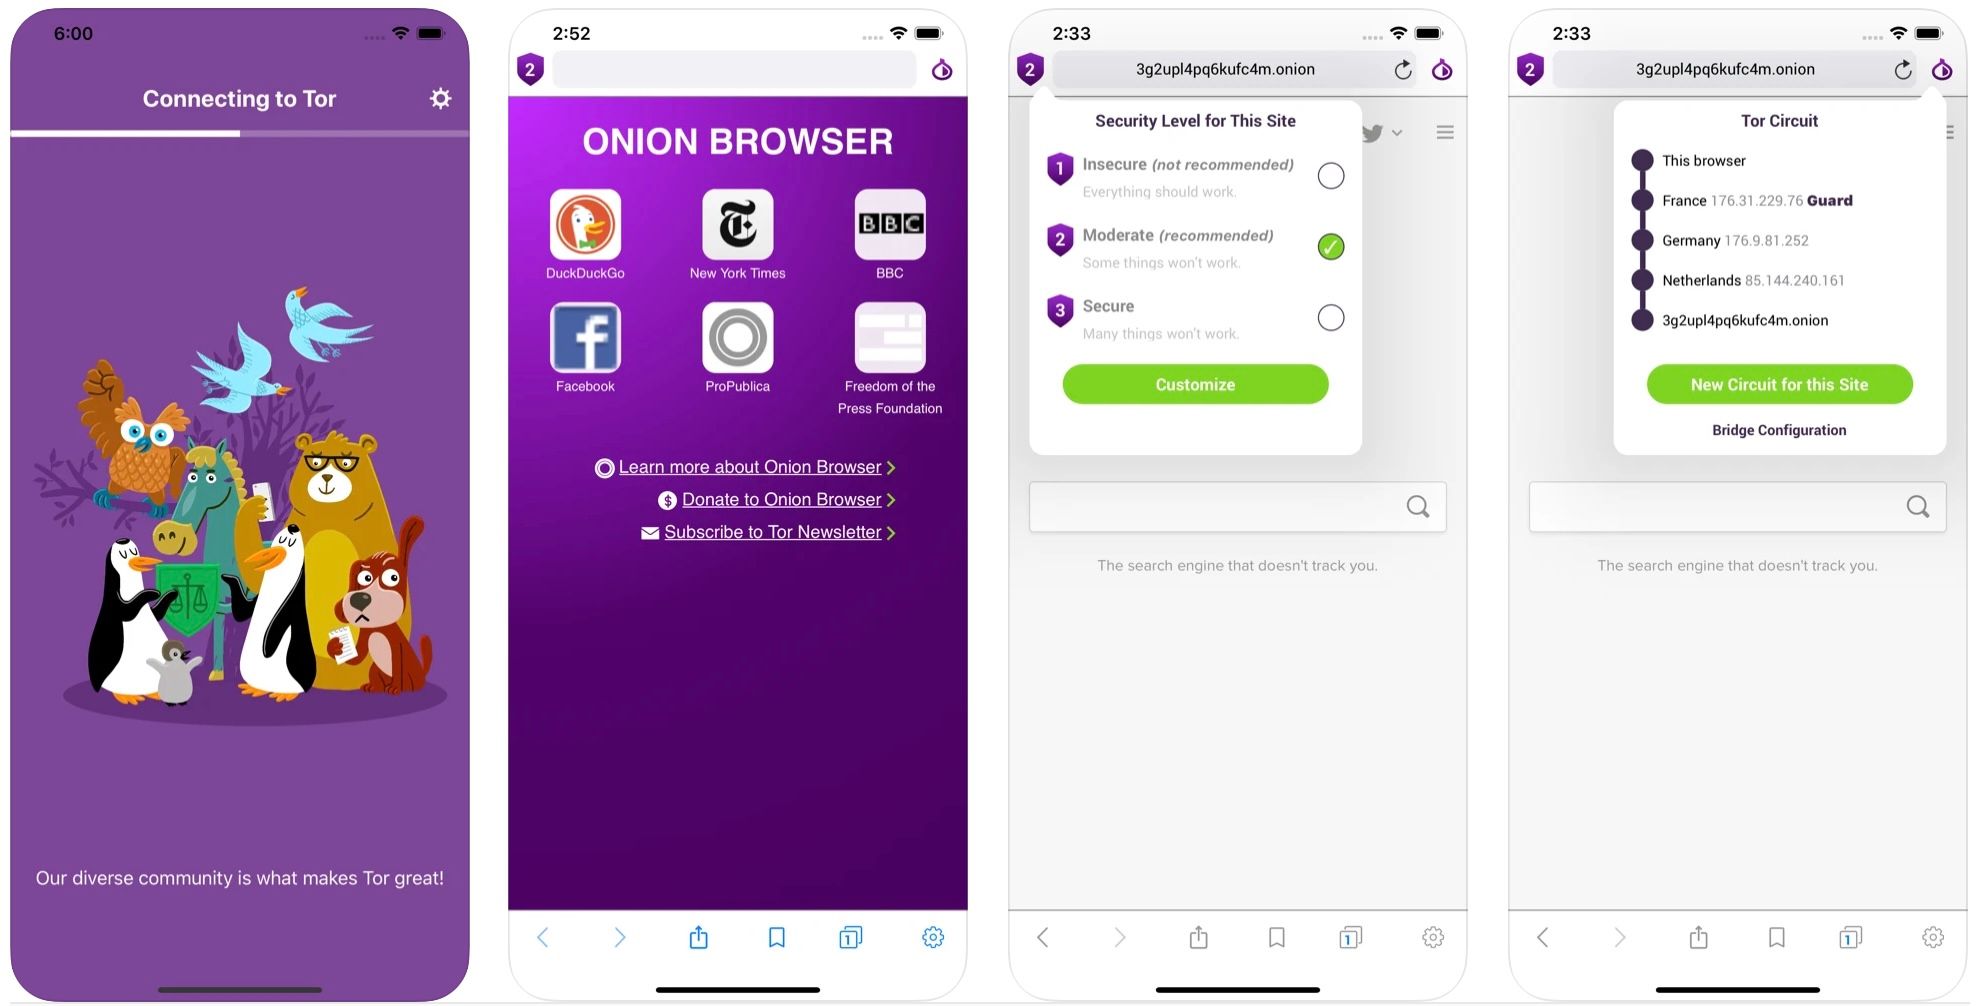 Onion Browser iPhone App Screenshots